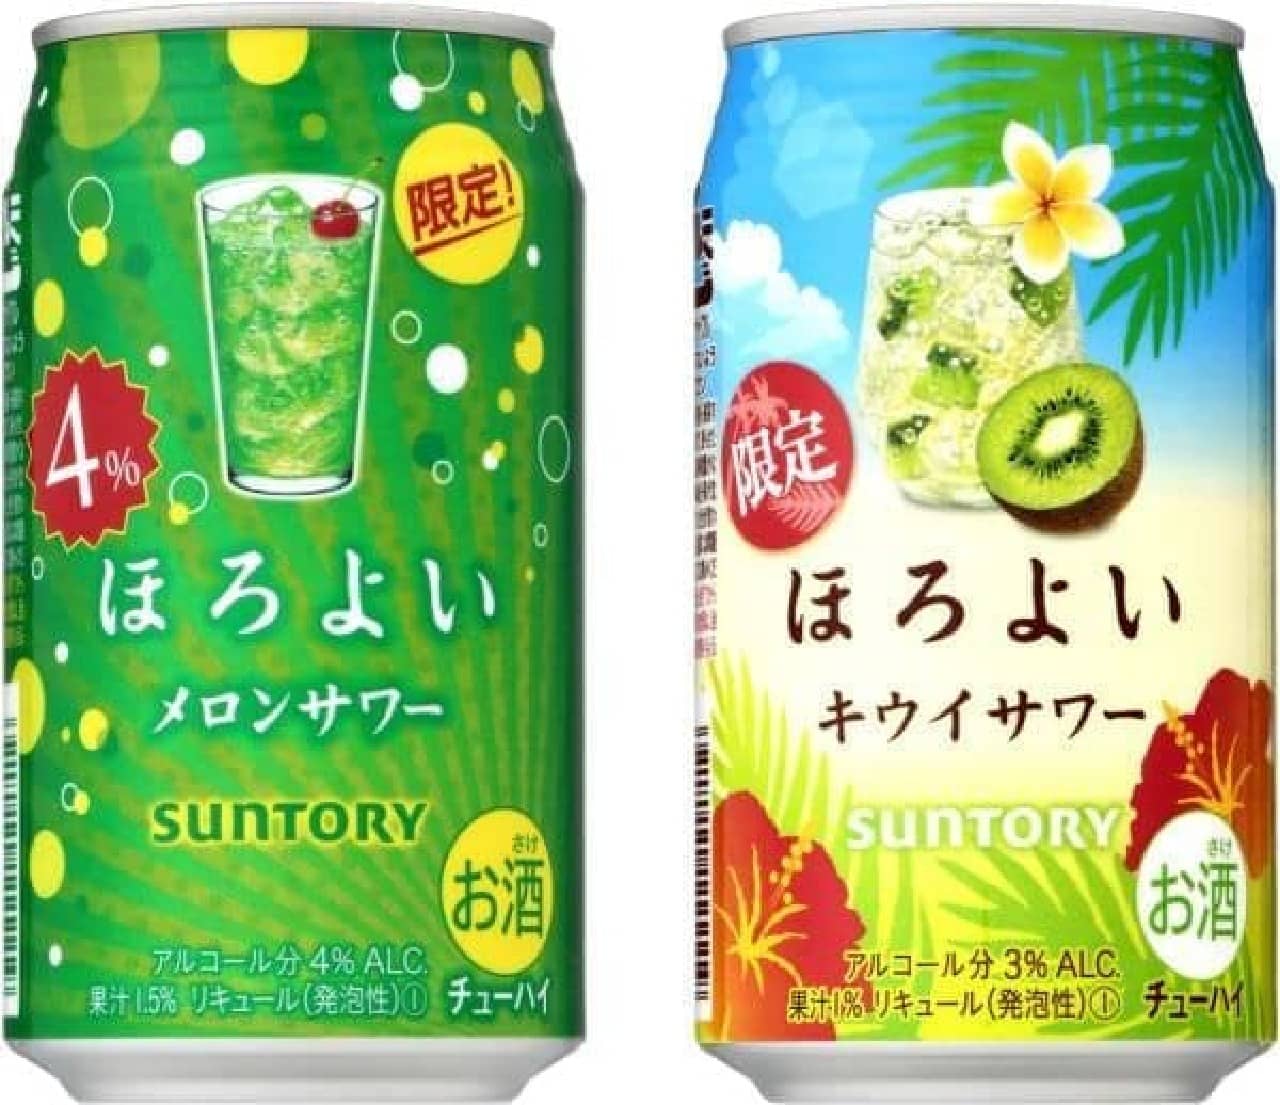 From the Suntory Chu-Hi "Horoyoi" brand, "Melon Sour" and "Kiwi Sour"